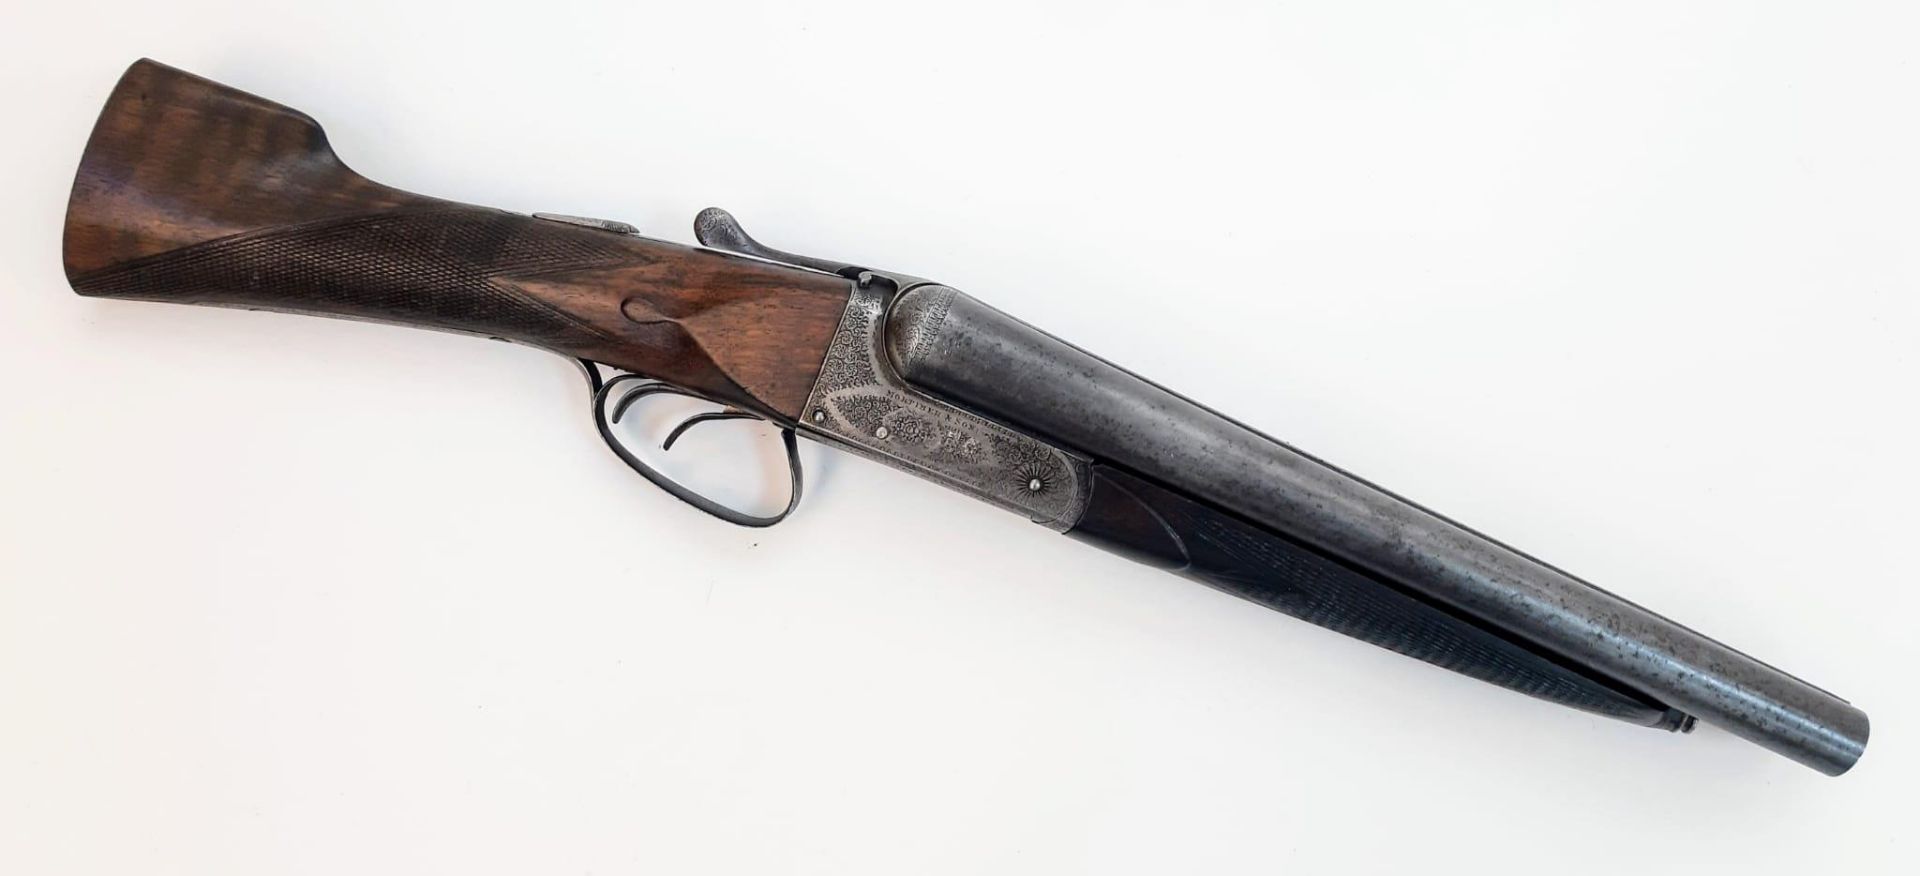 A Vintage Deactivated 12 Gauge Side by Side Sawn-Off Shotgun. This British Mortimer made gun has